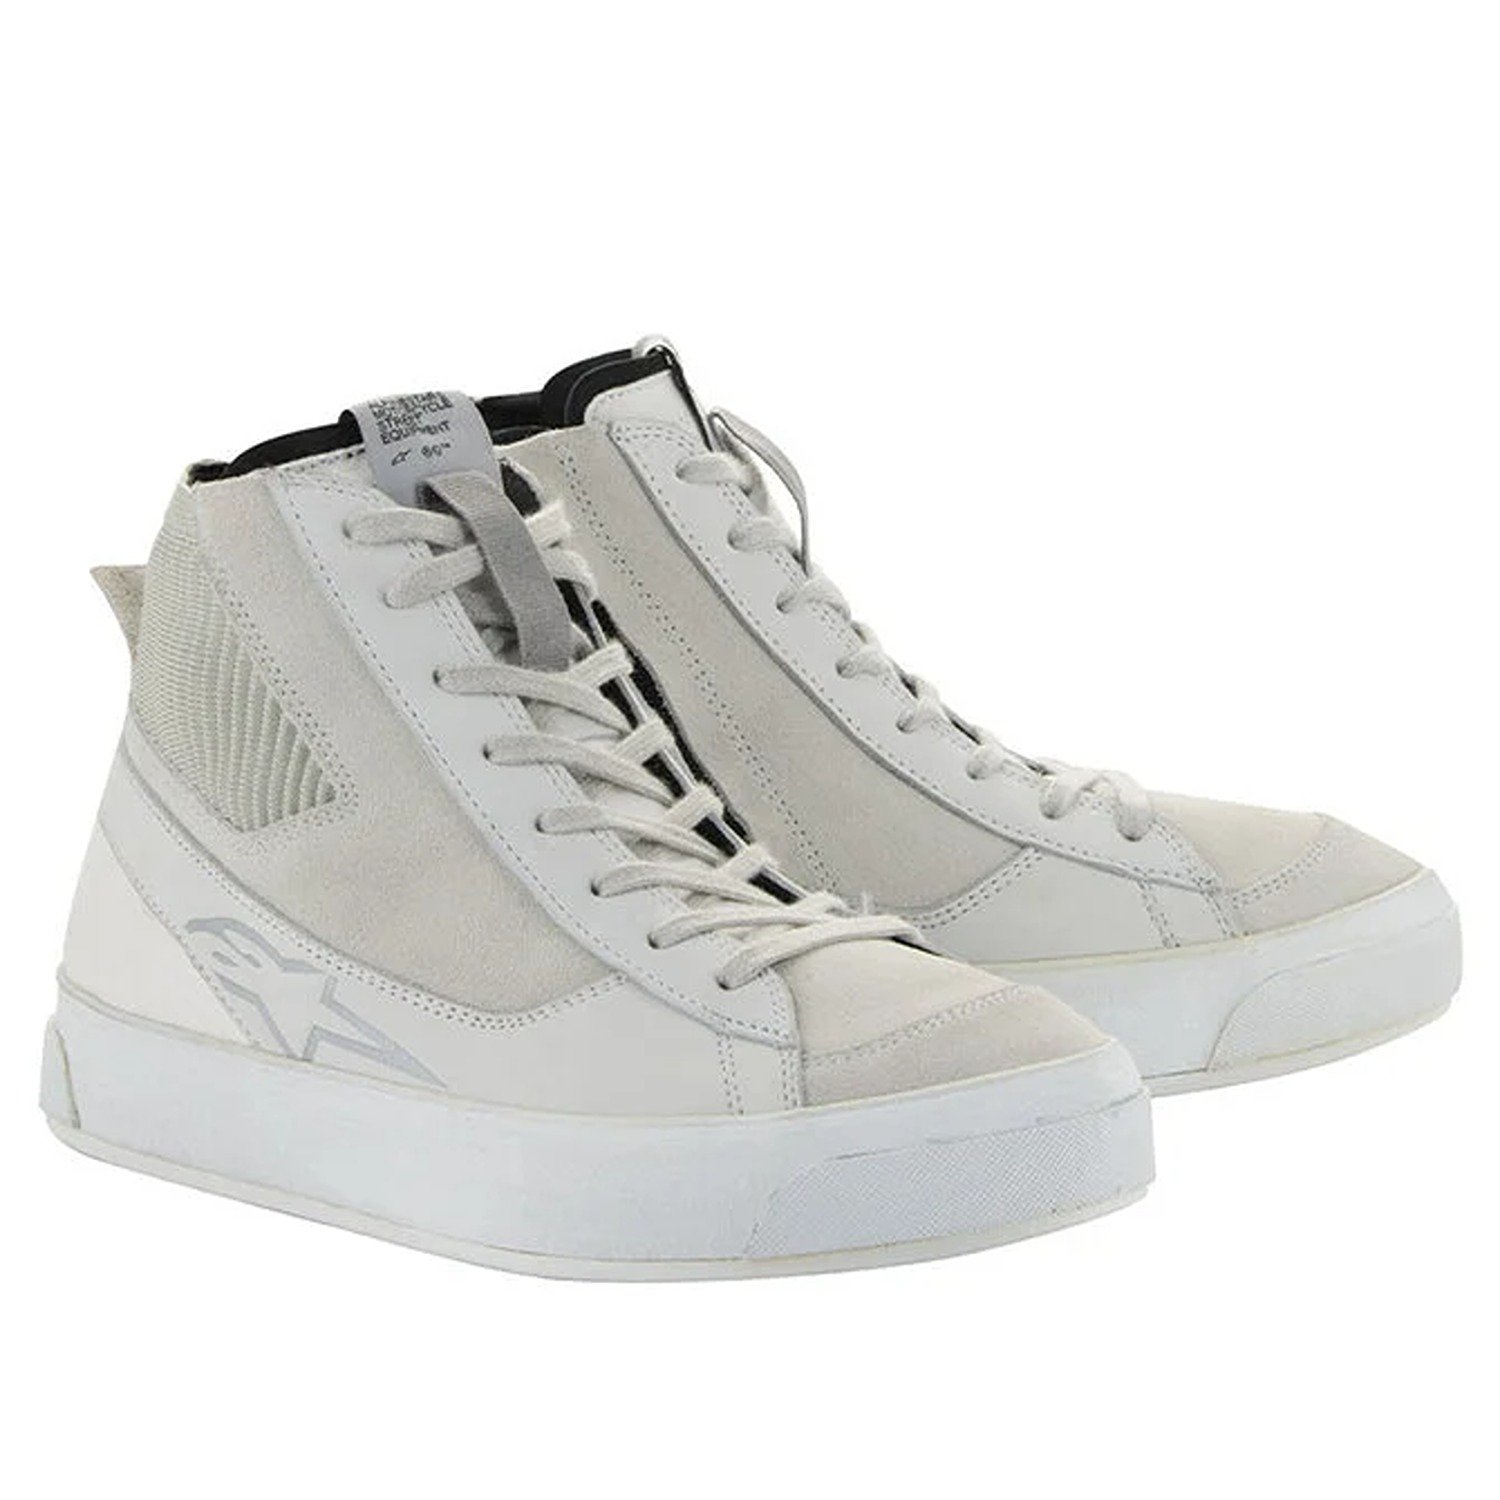 Image of EU Alpinestars Stella Stated Podium Shoes White Cool Gray Taille US 105